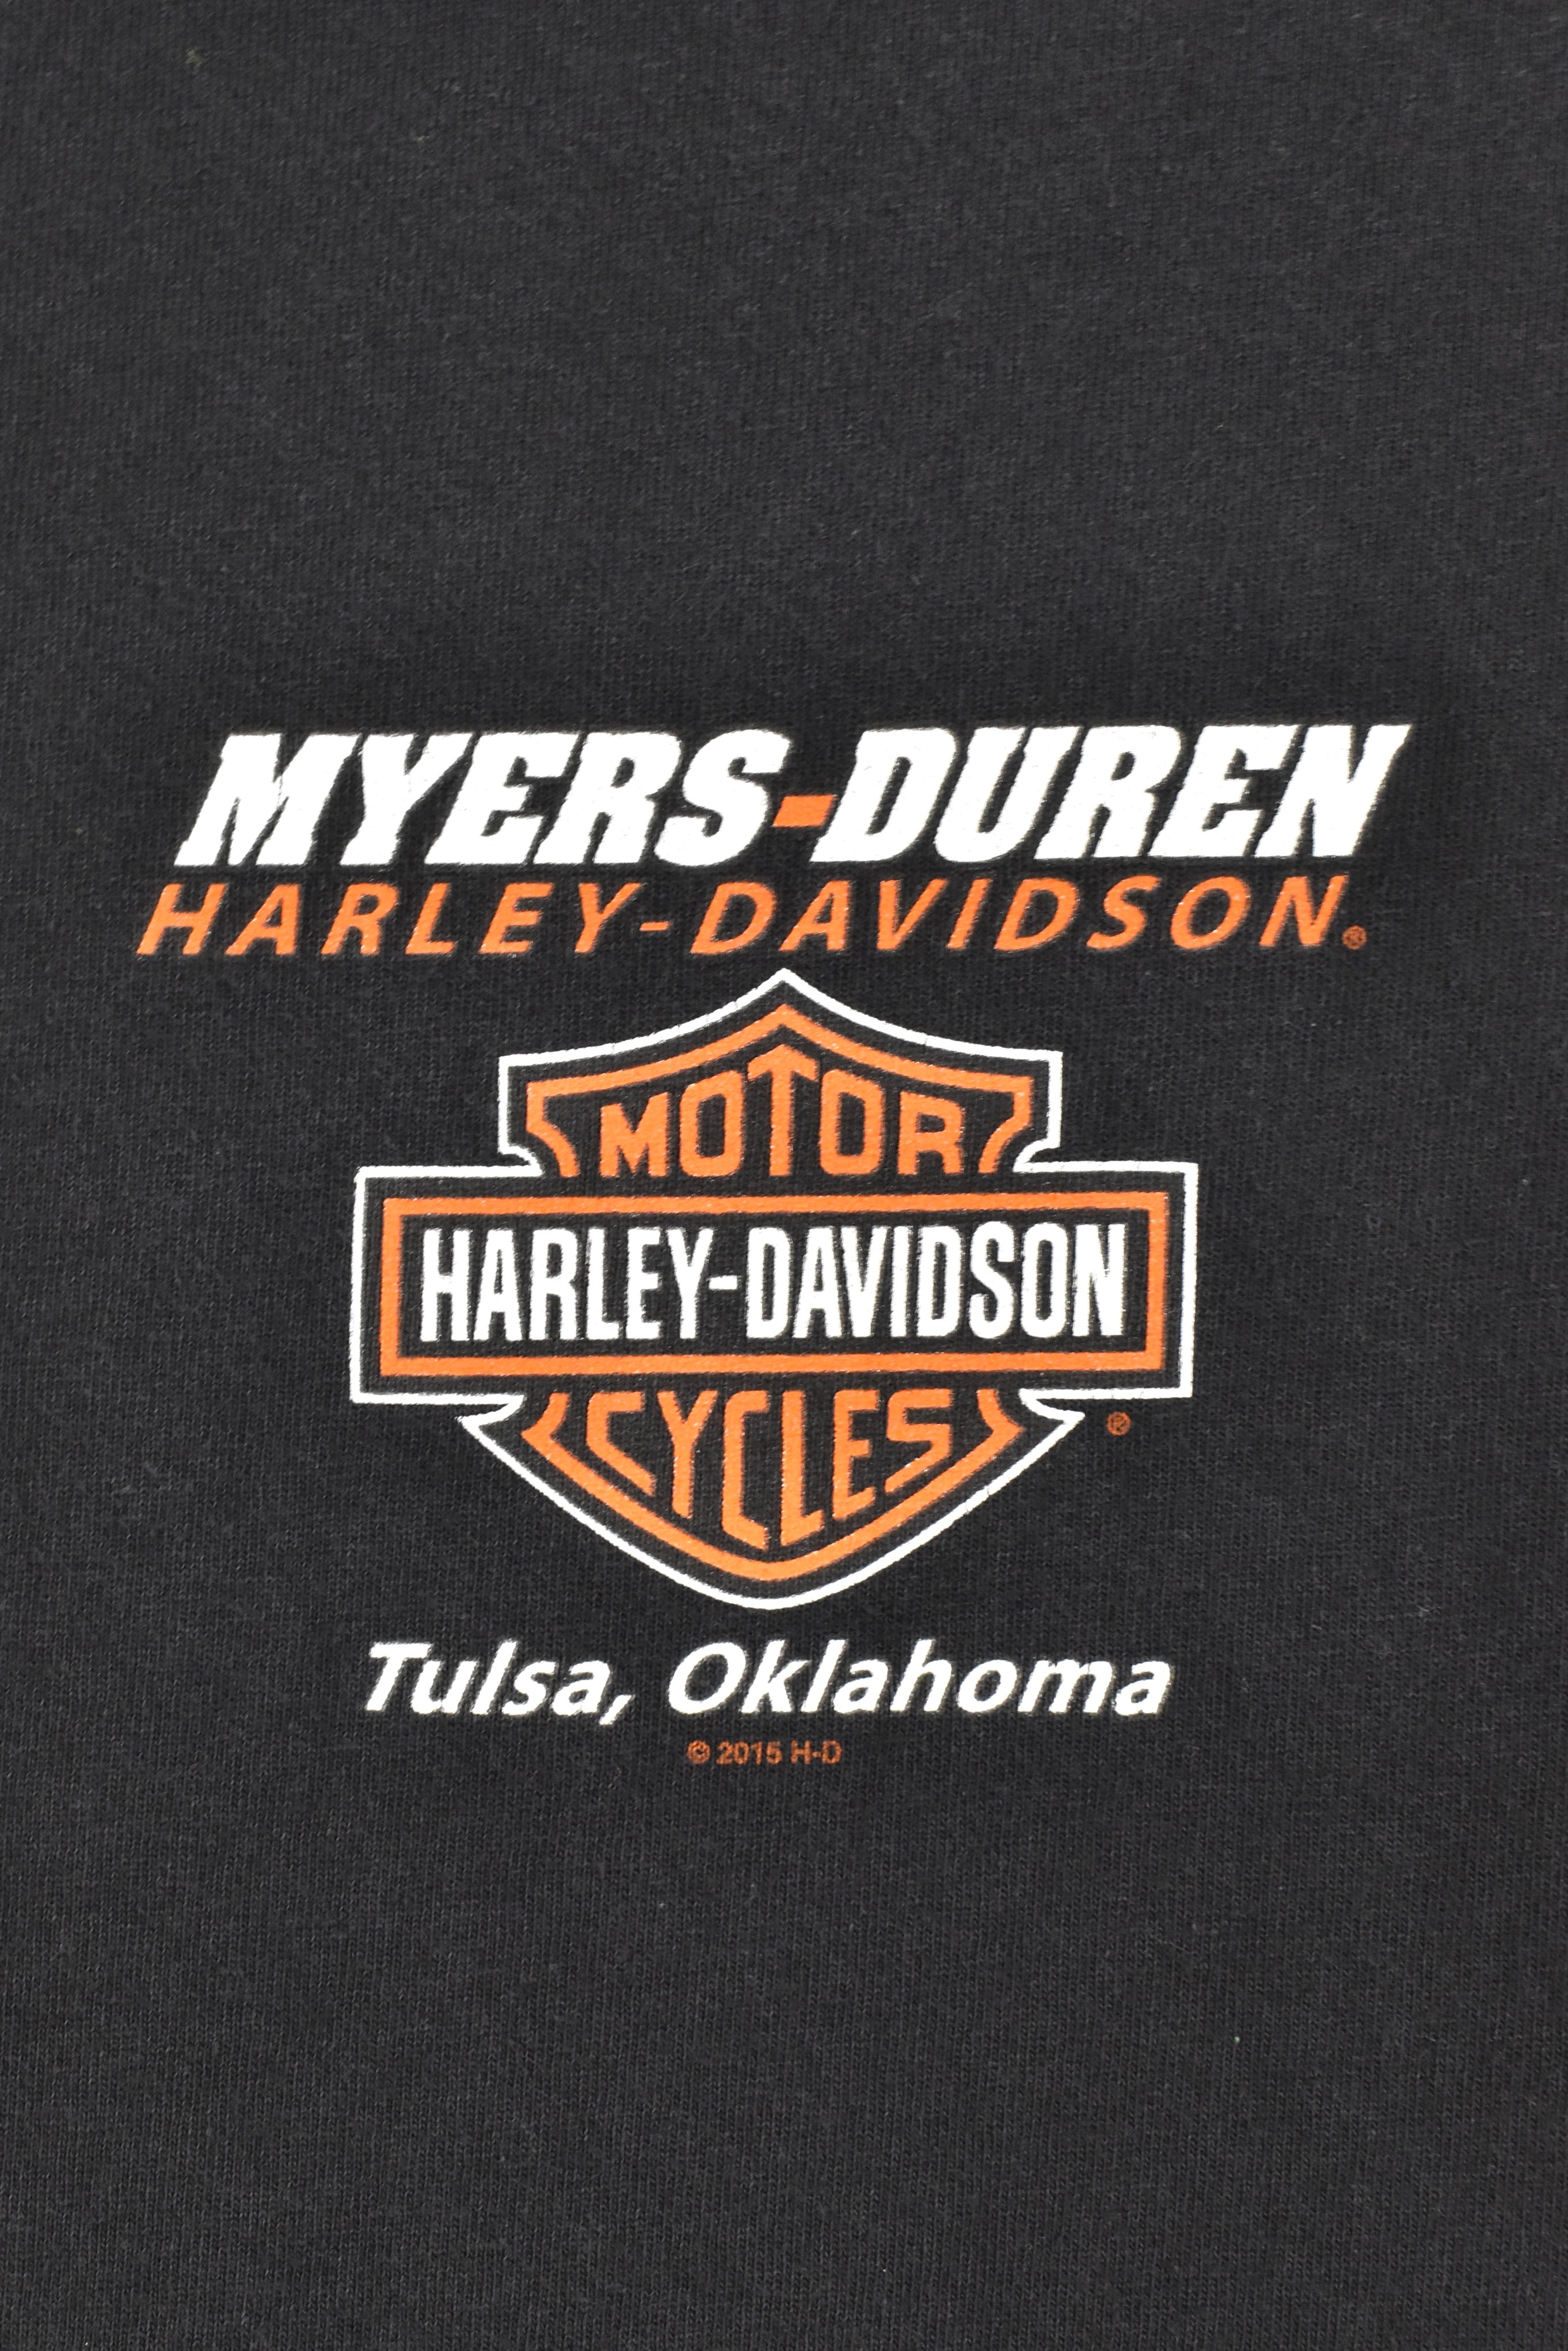 Modern Harley Davidson shirt, 2015 biker graphic tee - medium, black HARLEY DAVIDSON